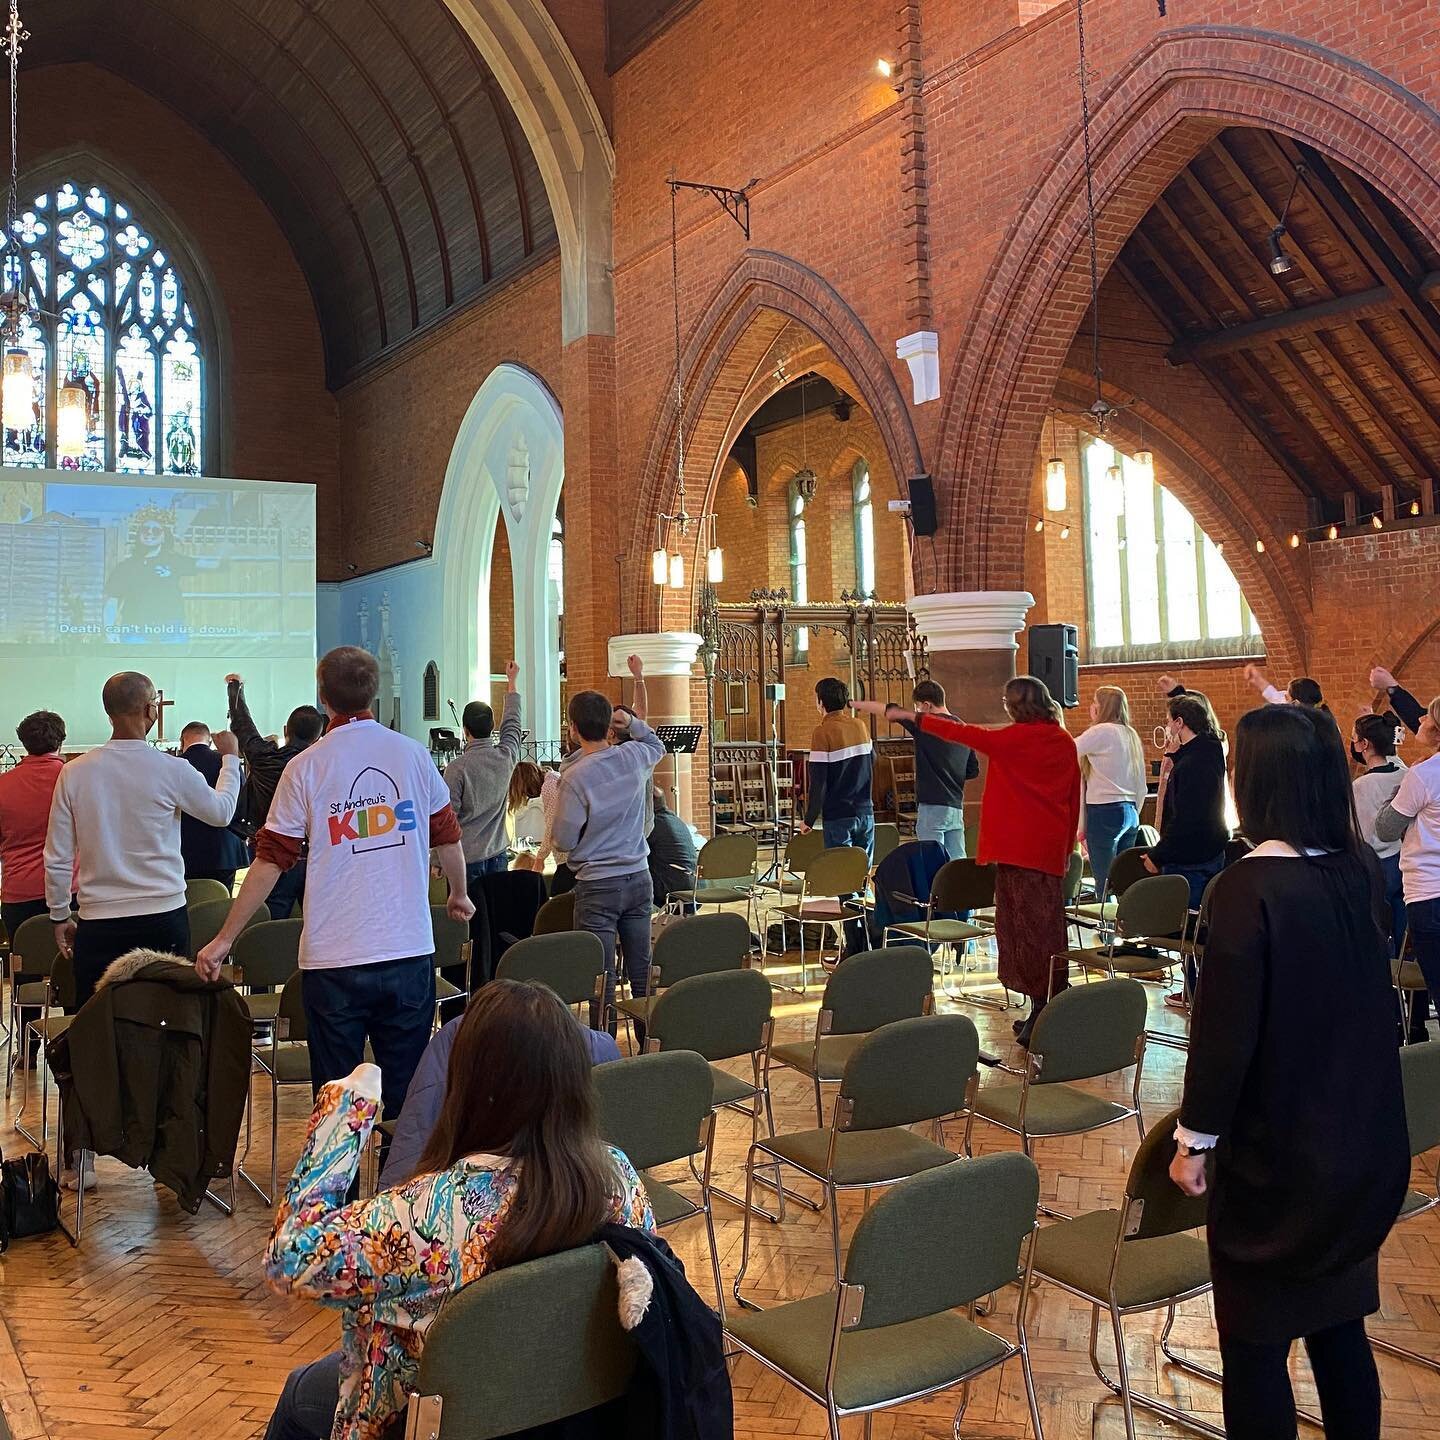 What a joy to worship together again this week!

#church #wimbledon #worship